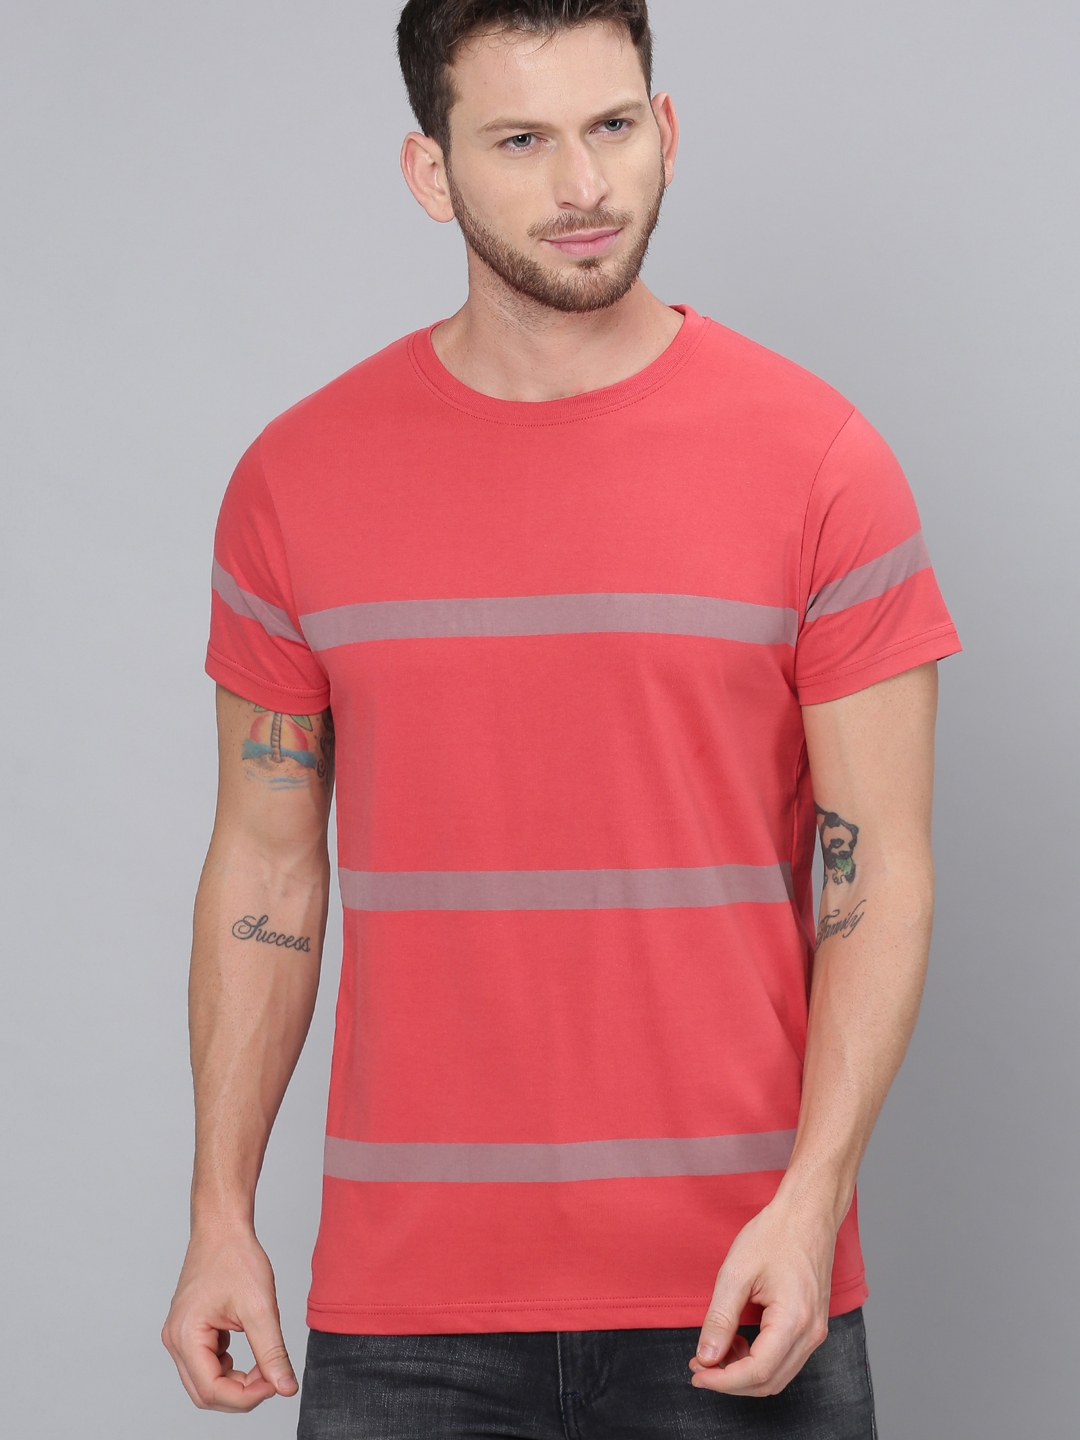 Dillinger | Dillinger Red Striped T-Shirt